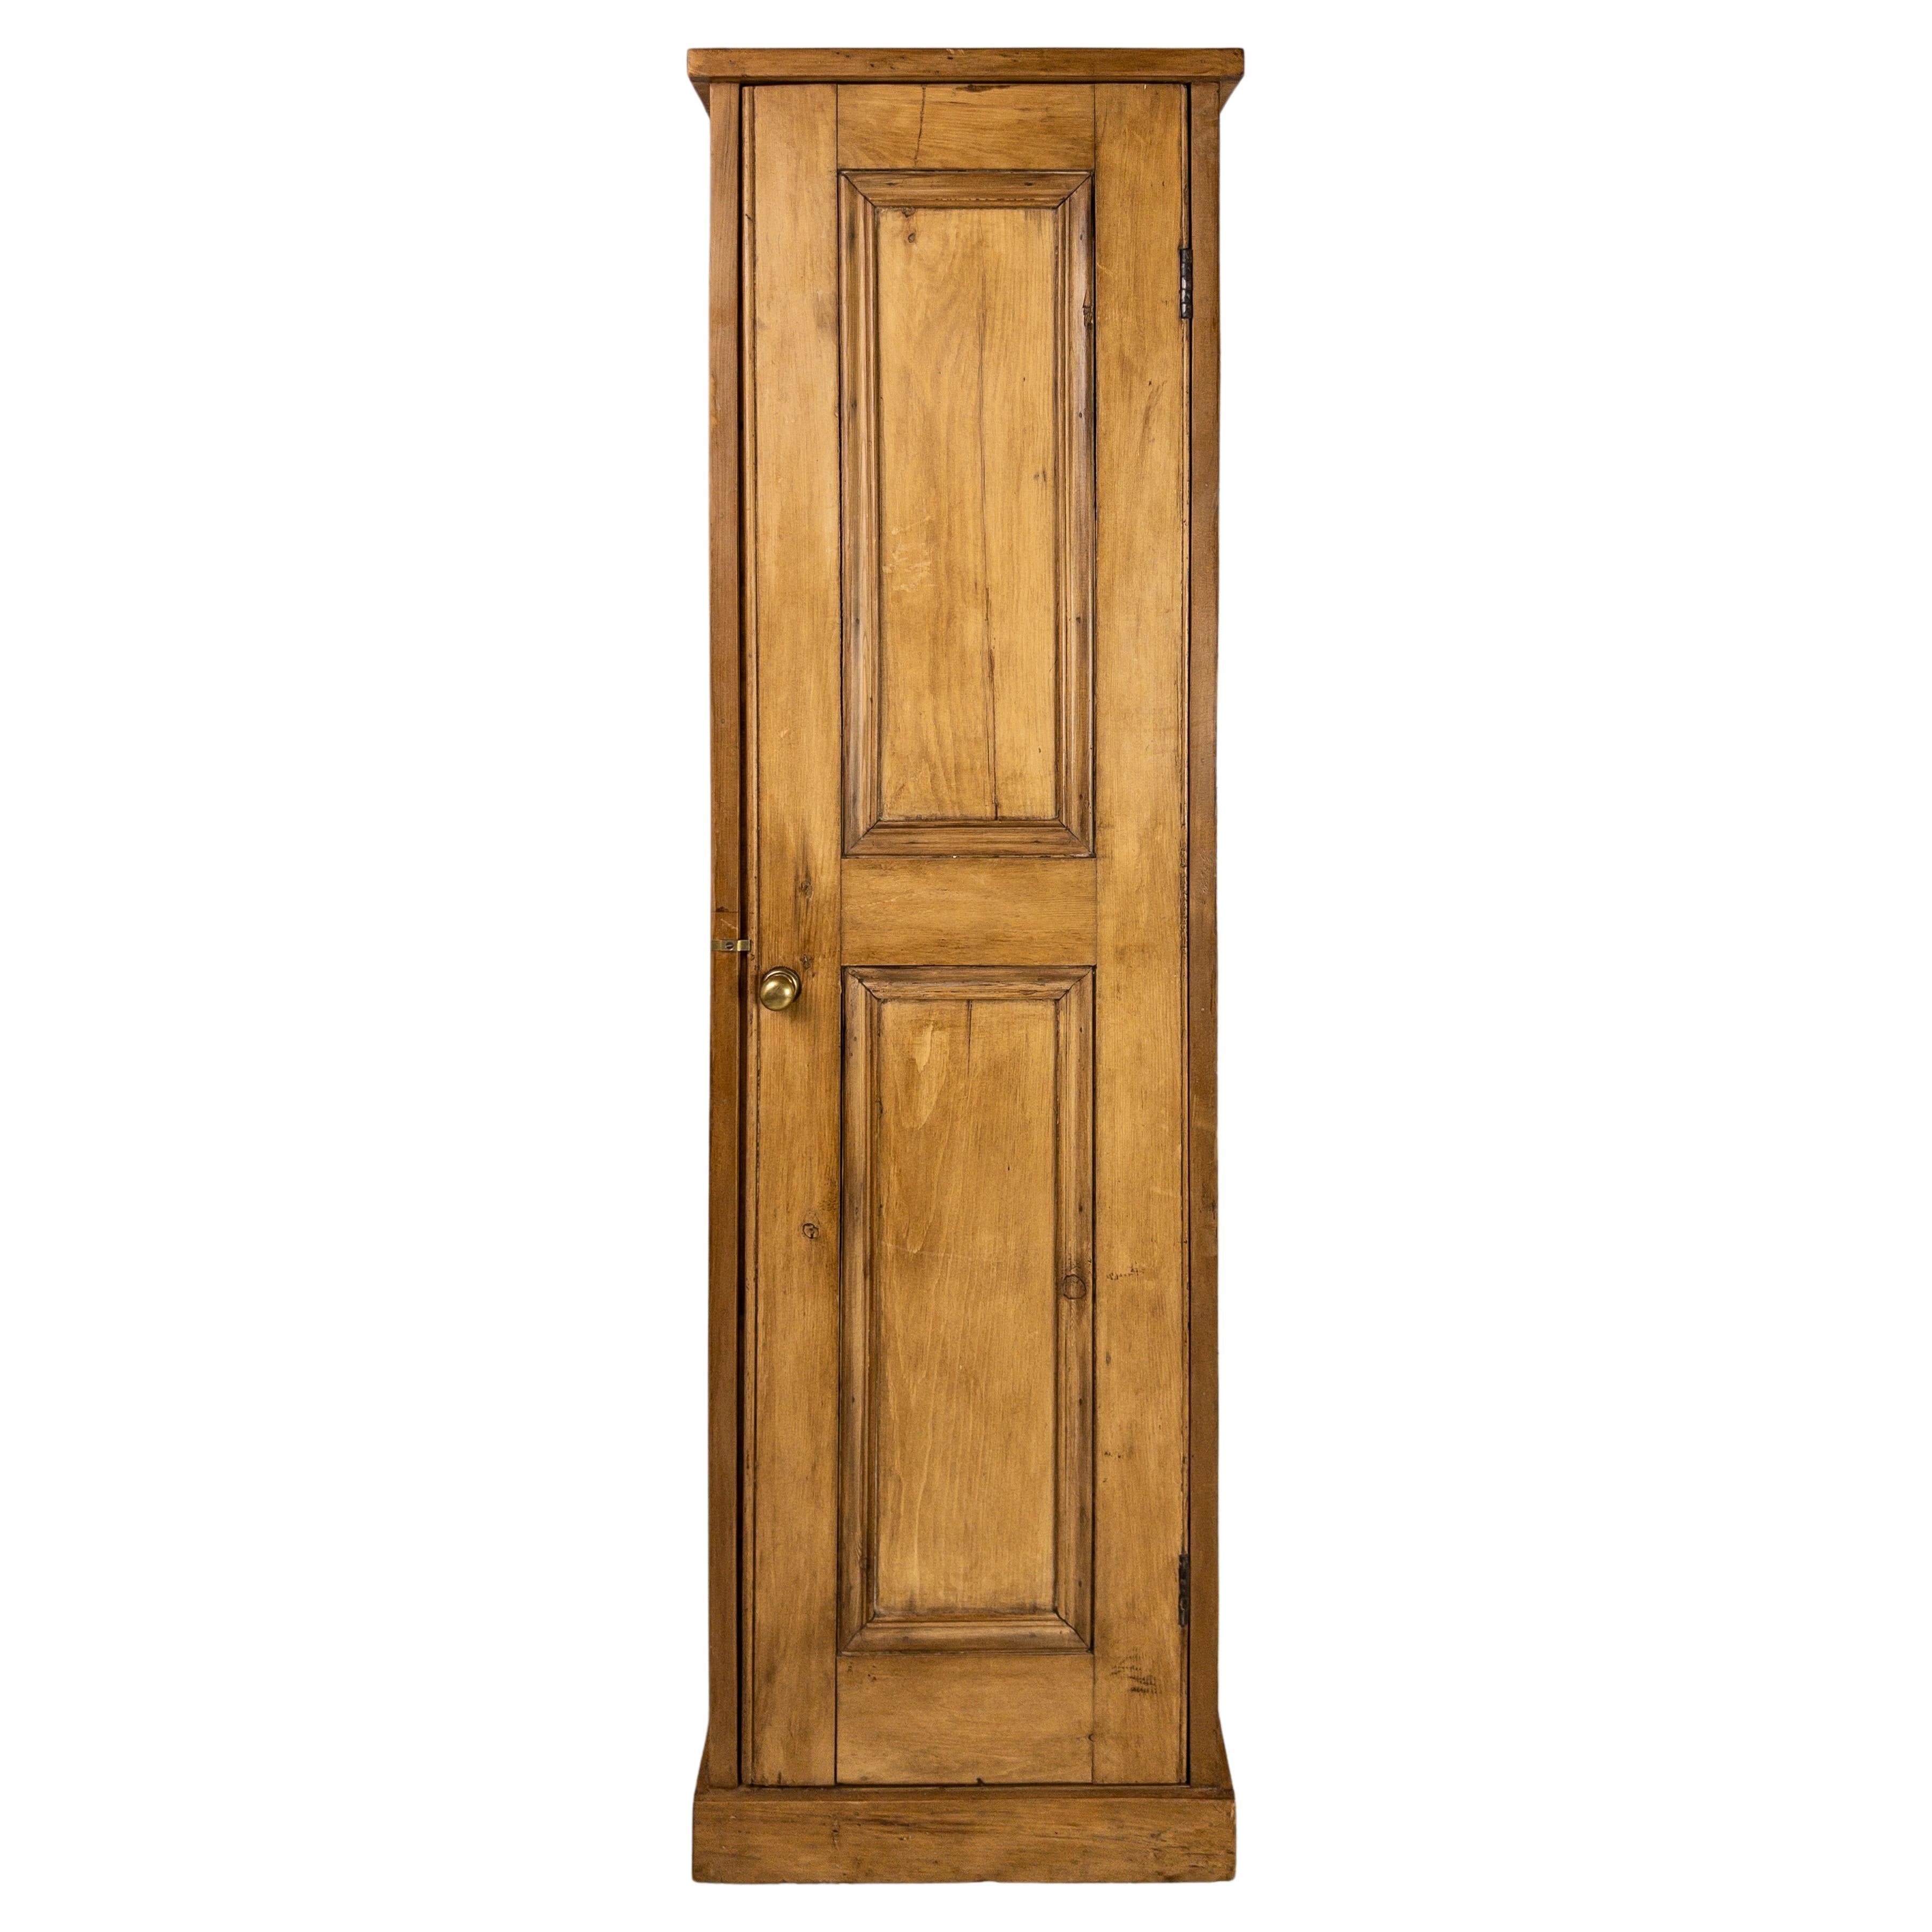 19th Century English Pine Tall Cabinet